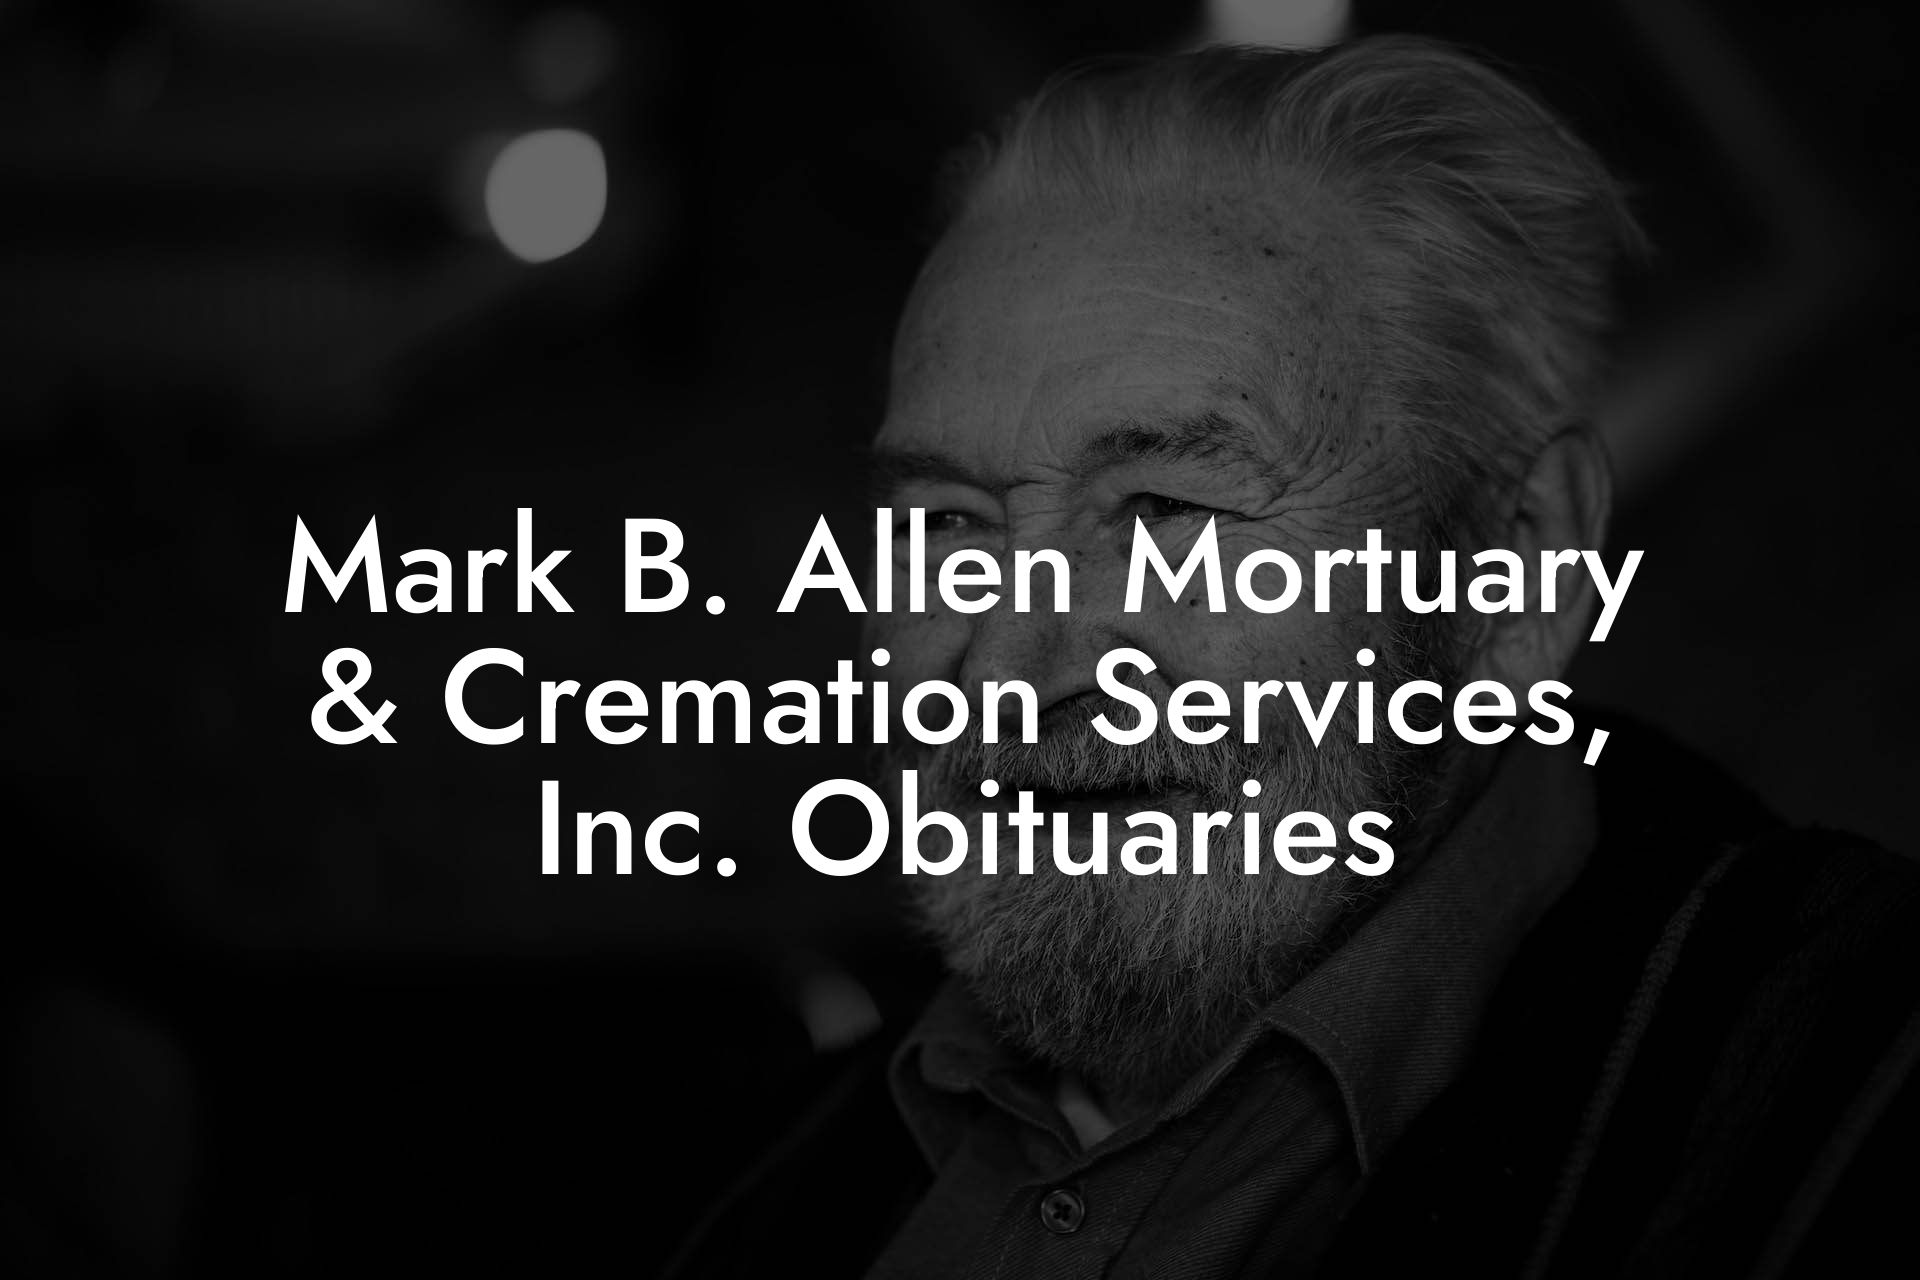 Mark B. Allen Mortuary & Cremation Services, Inc. Obituaries